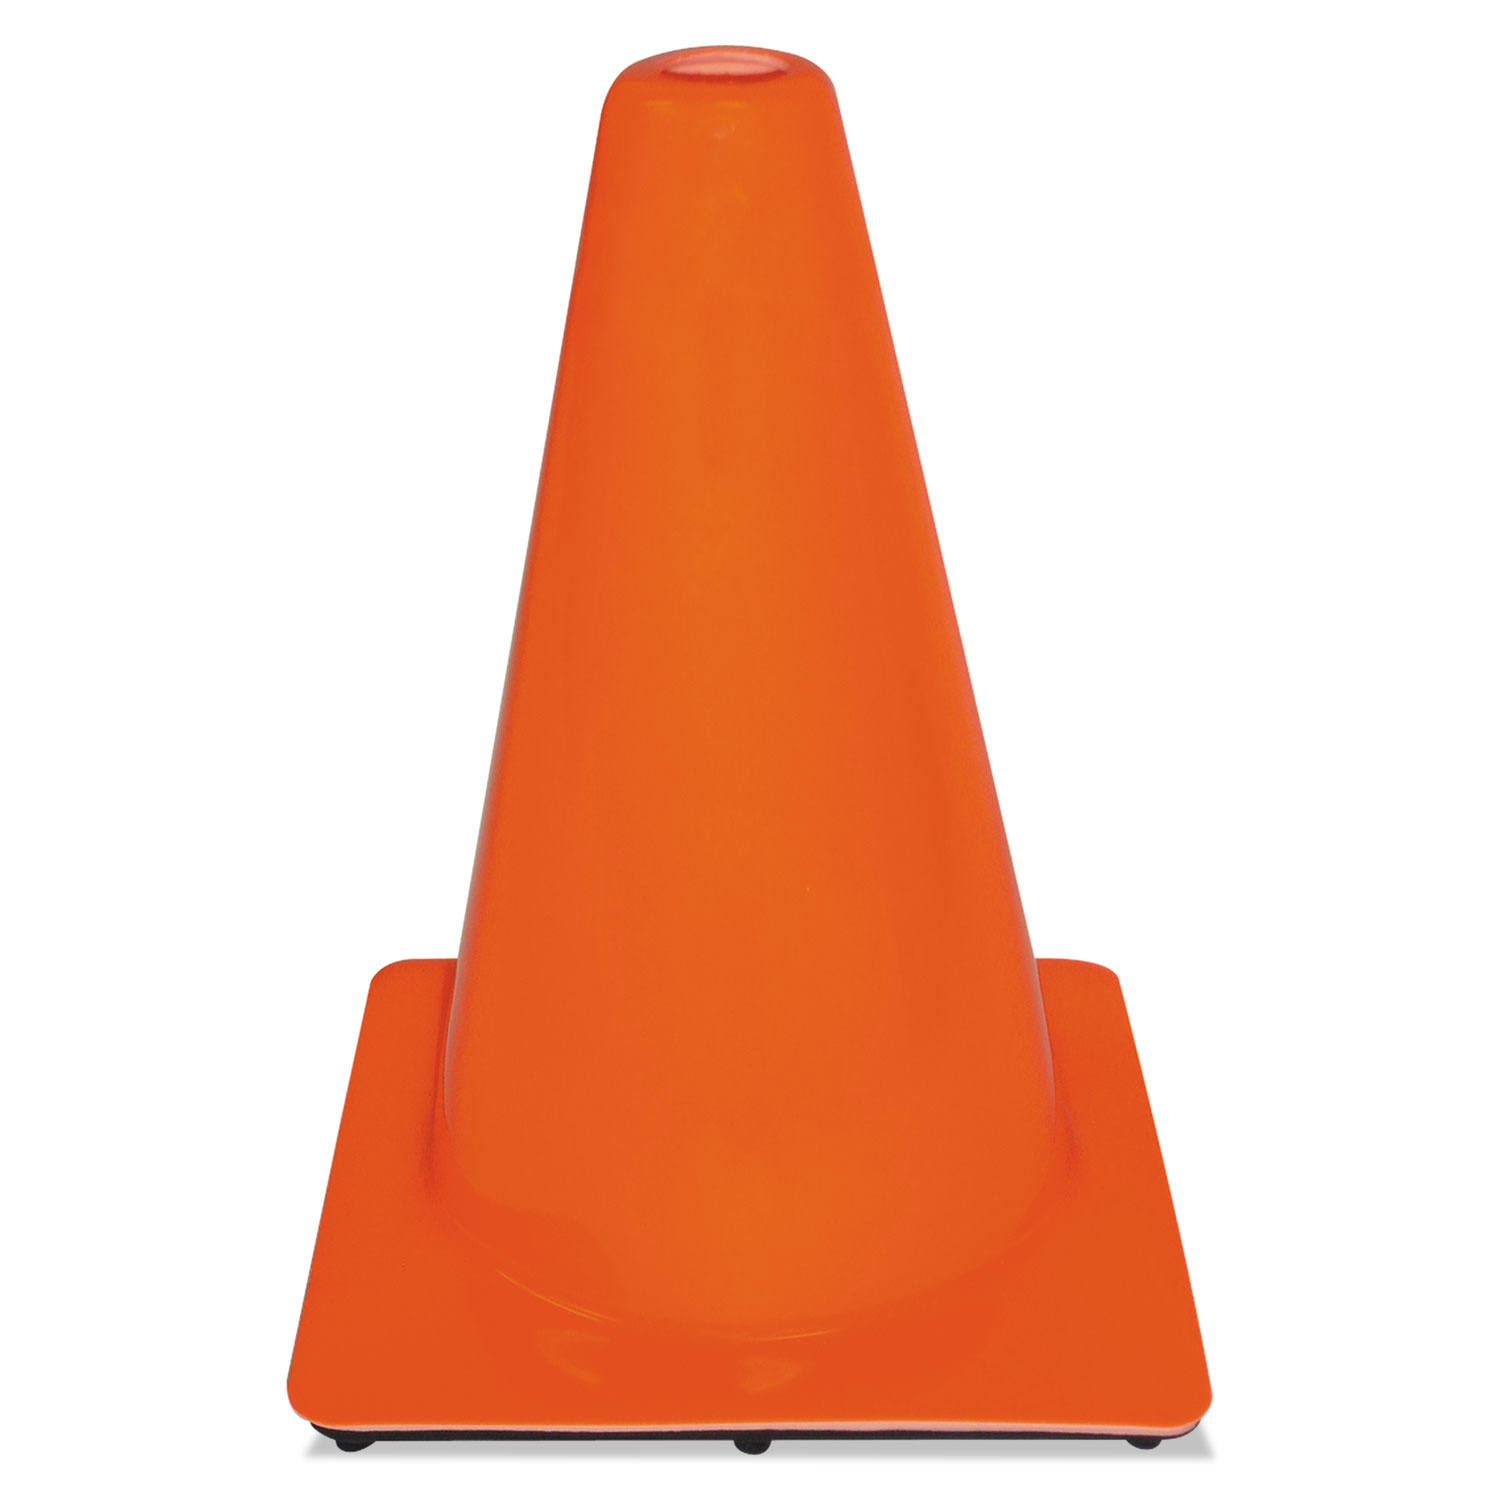  3M 90127-00001 Non-Reflective Safety Cone, 9 x 9 x 12, Orange (MMM9012700001) 